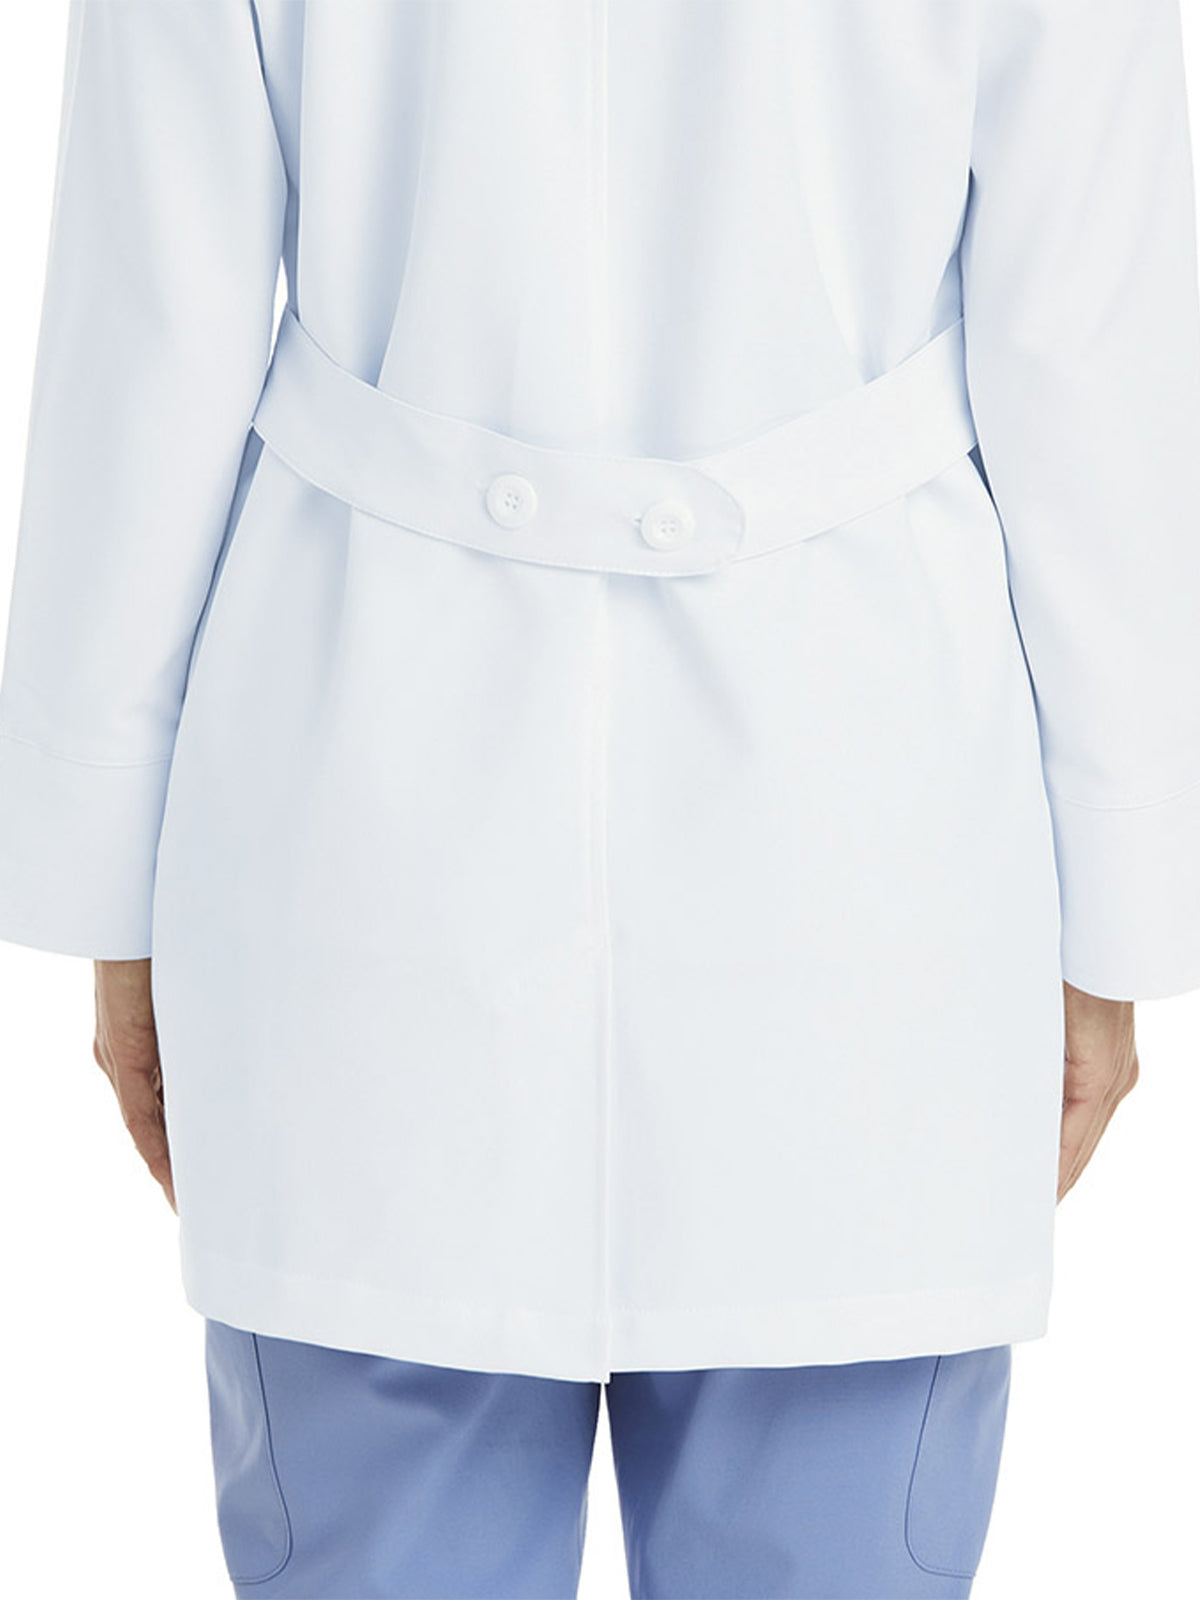 Women's Five-Pocket 32" Mid-Length Lab Coat